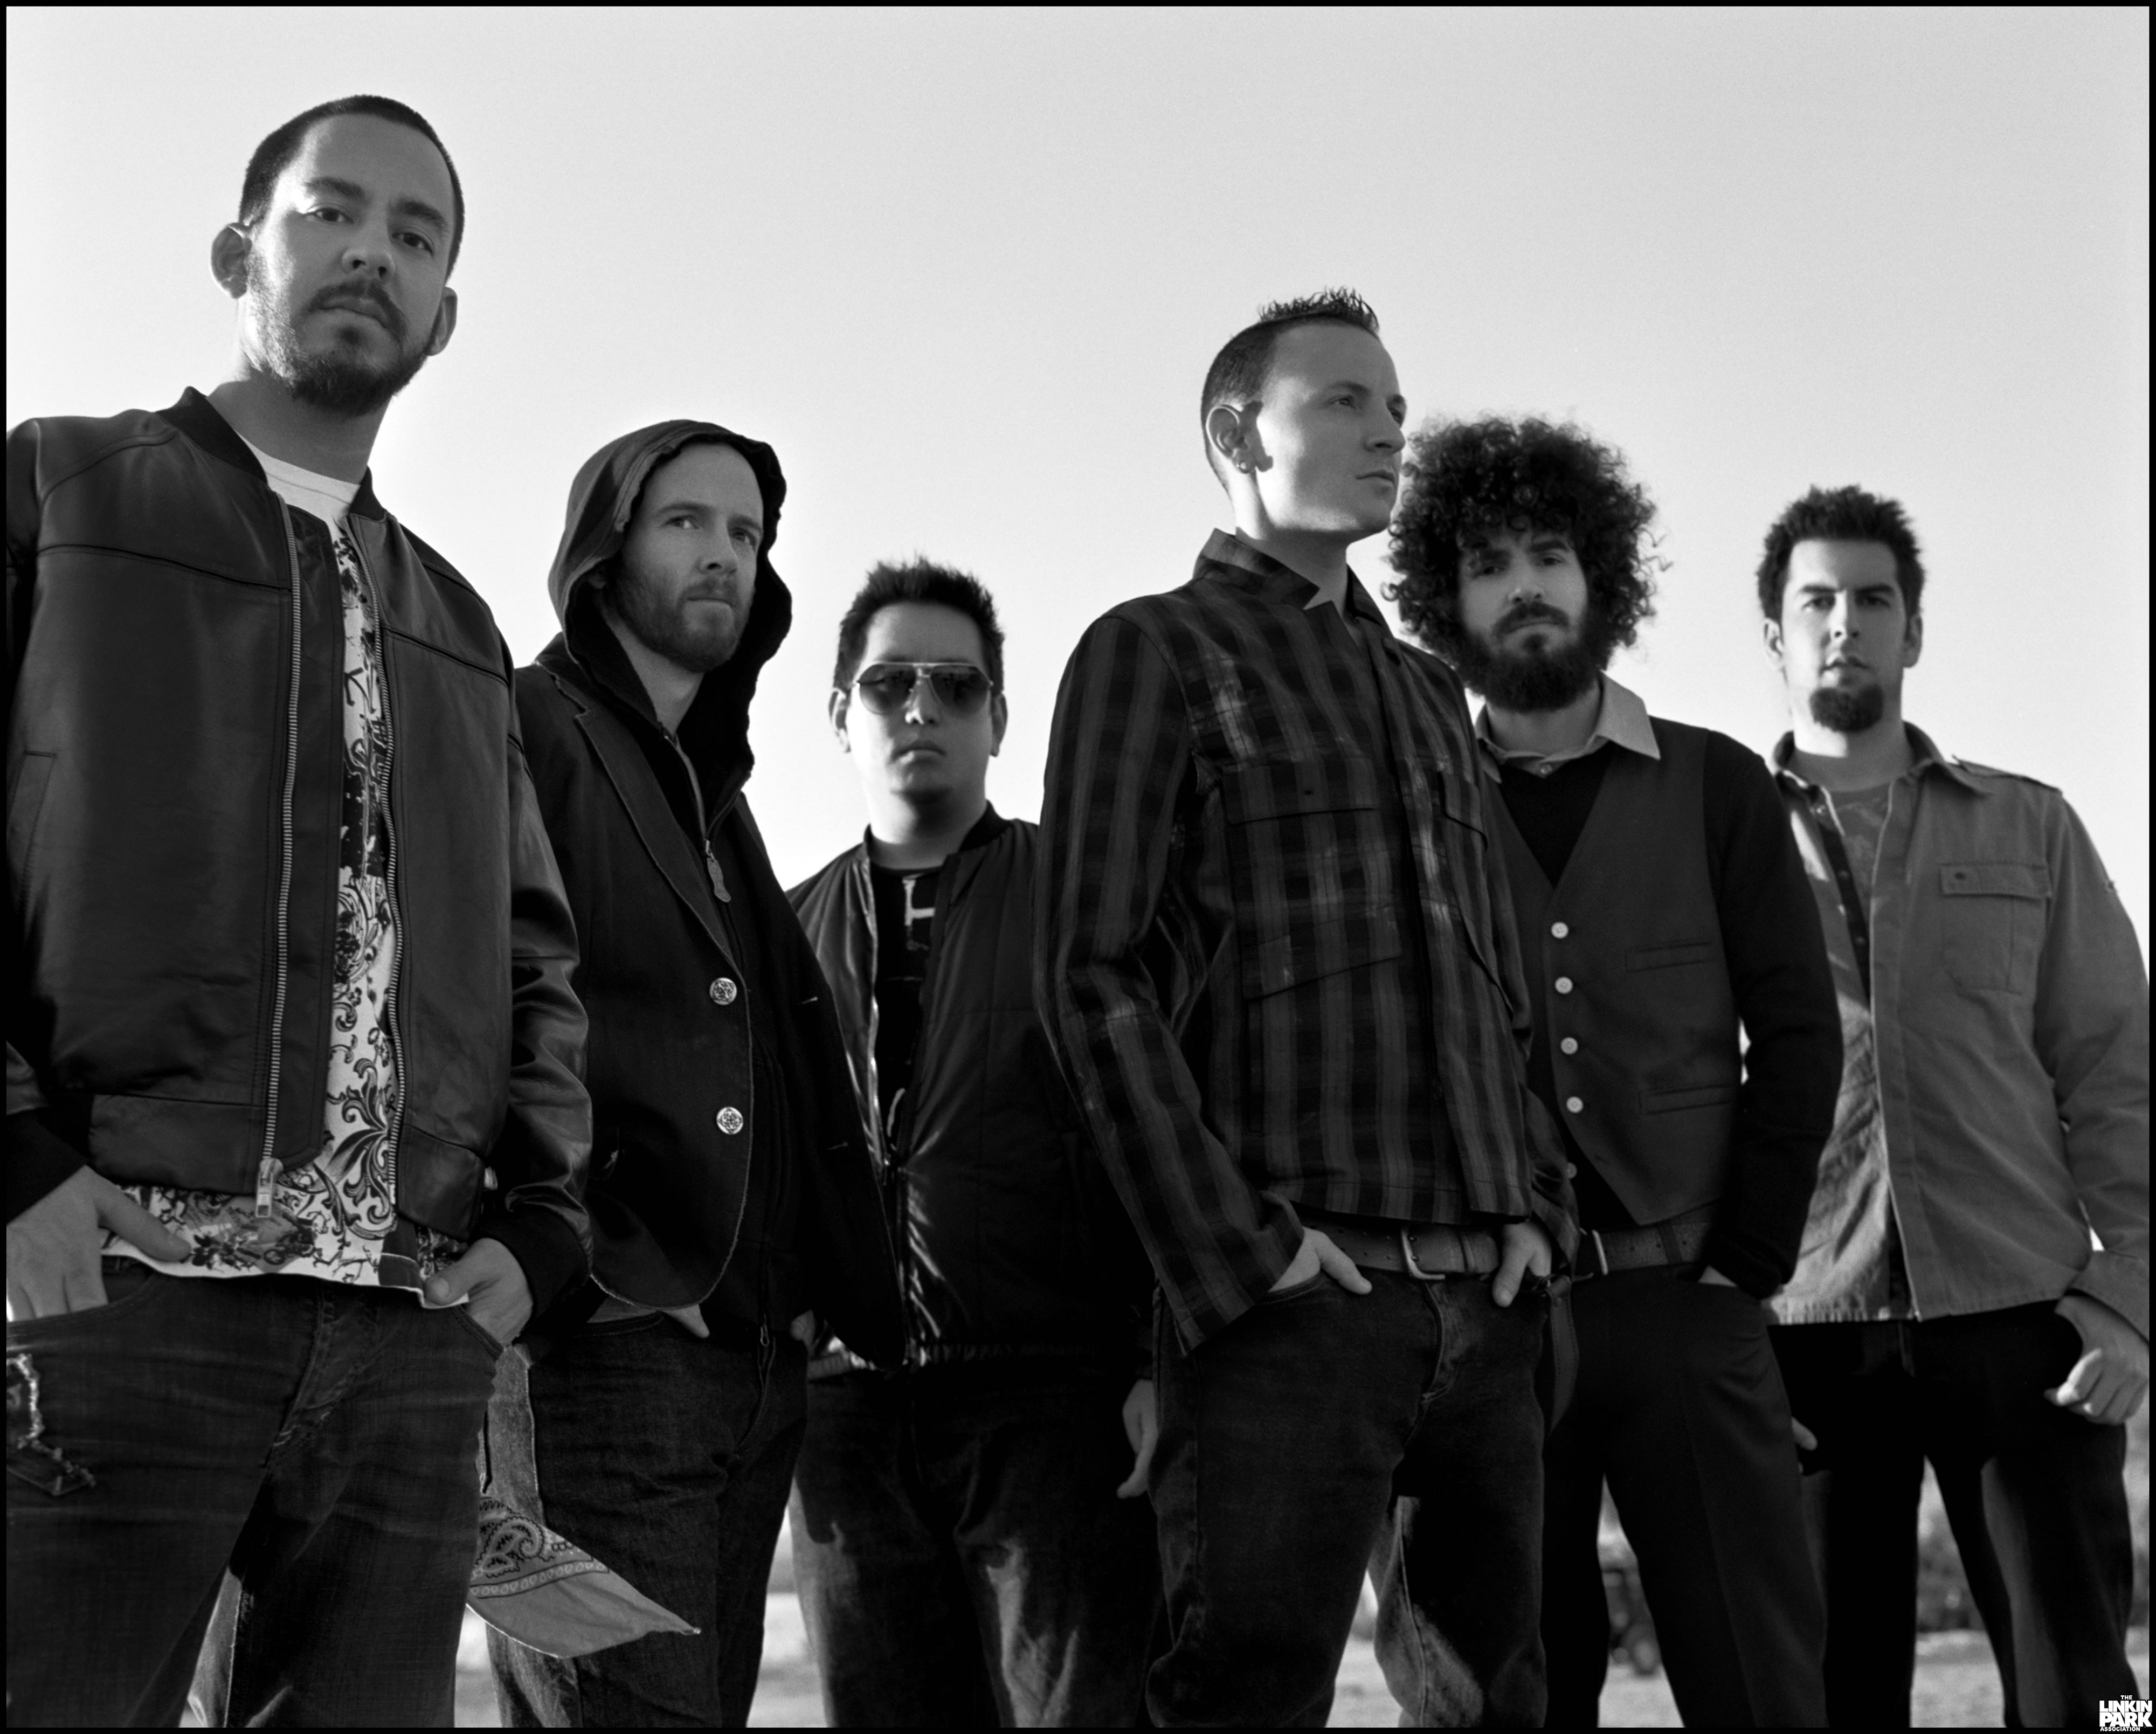 Linkin Park photo 428 of 4333 pics, wallpaper - photo #554709 - ThePlace2